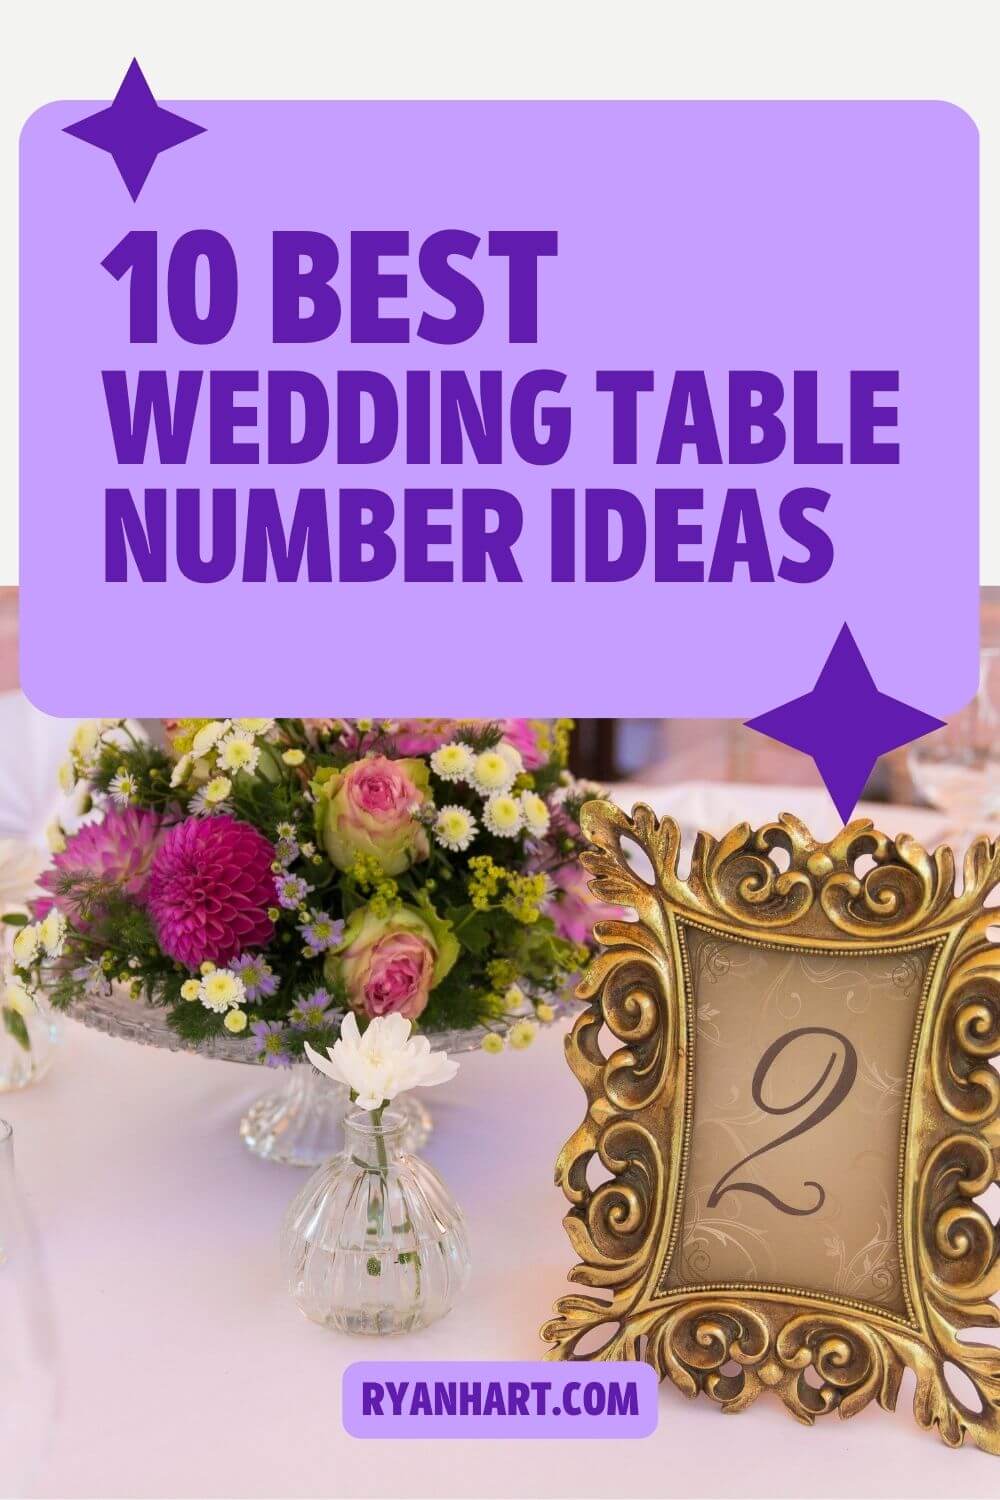 Wedding reception table